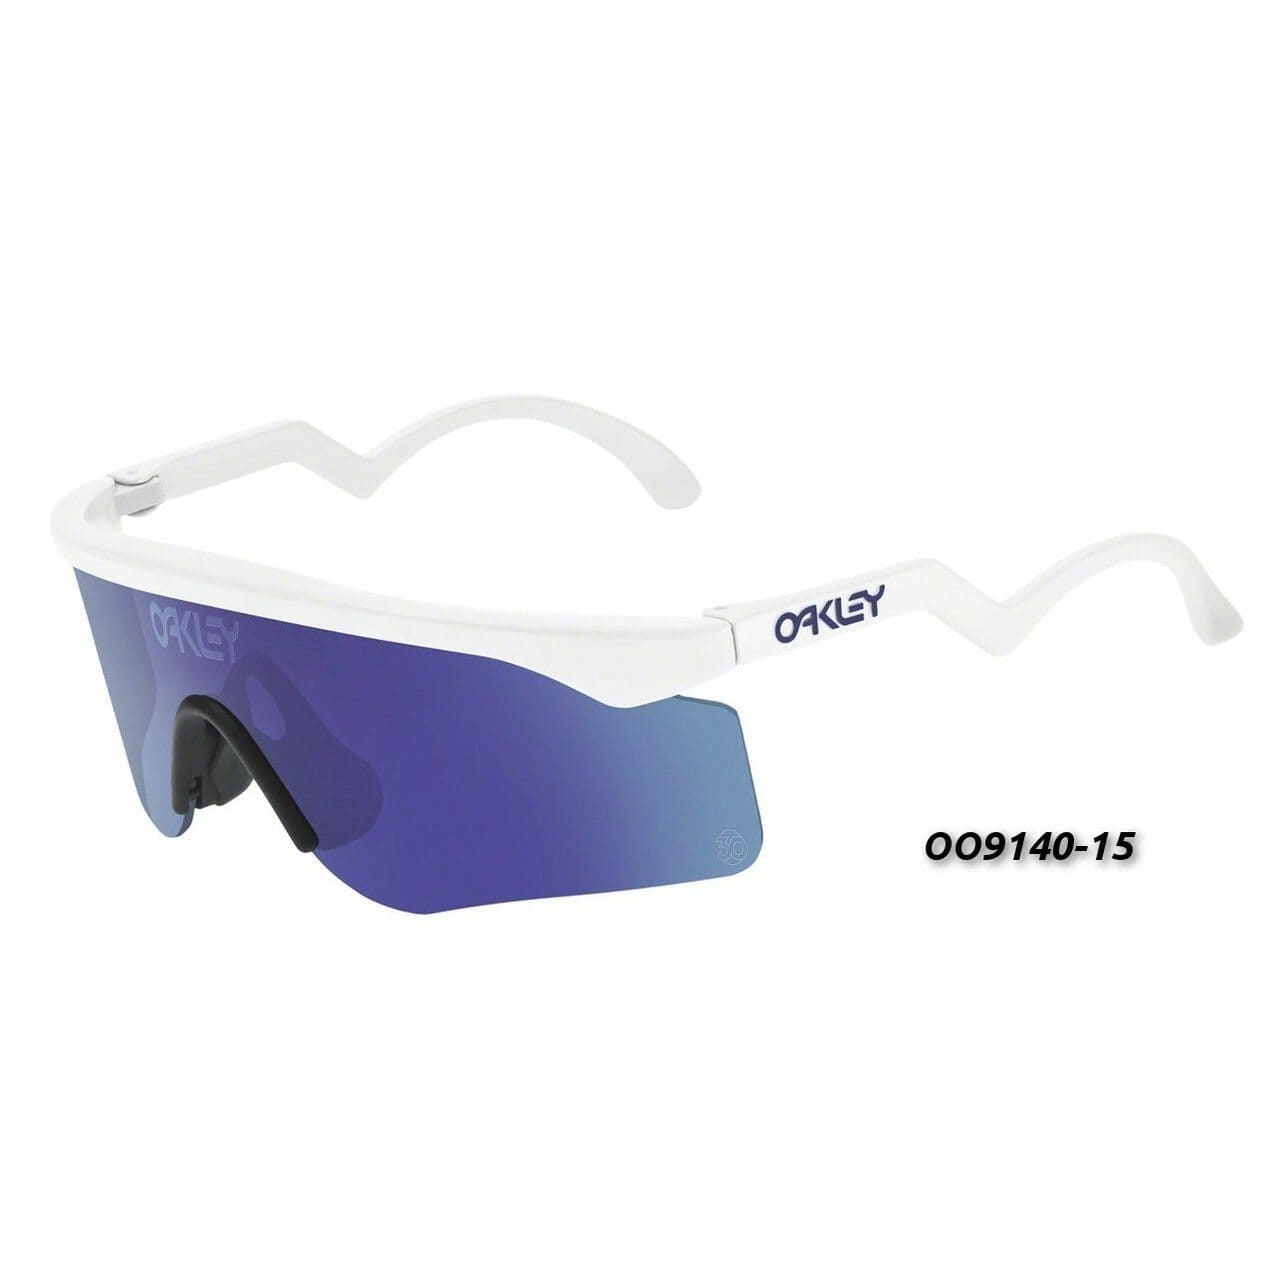 Oakley OO9140-15 Razor Blades White Sports Violet Iridium Lens Sunglasses 888392006004